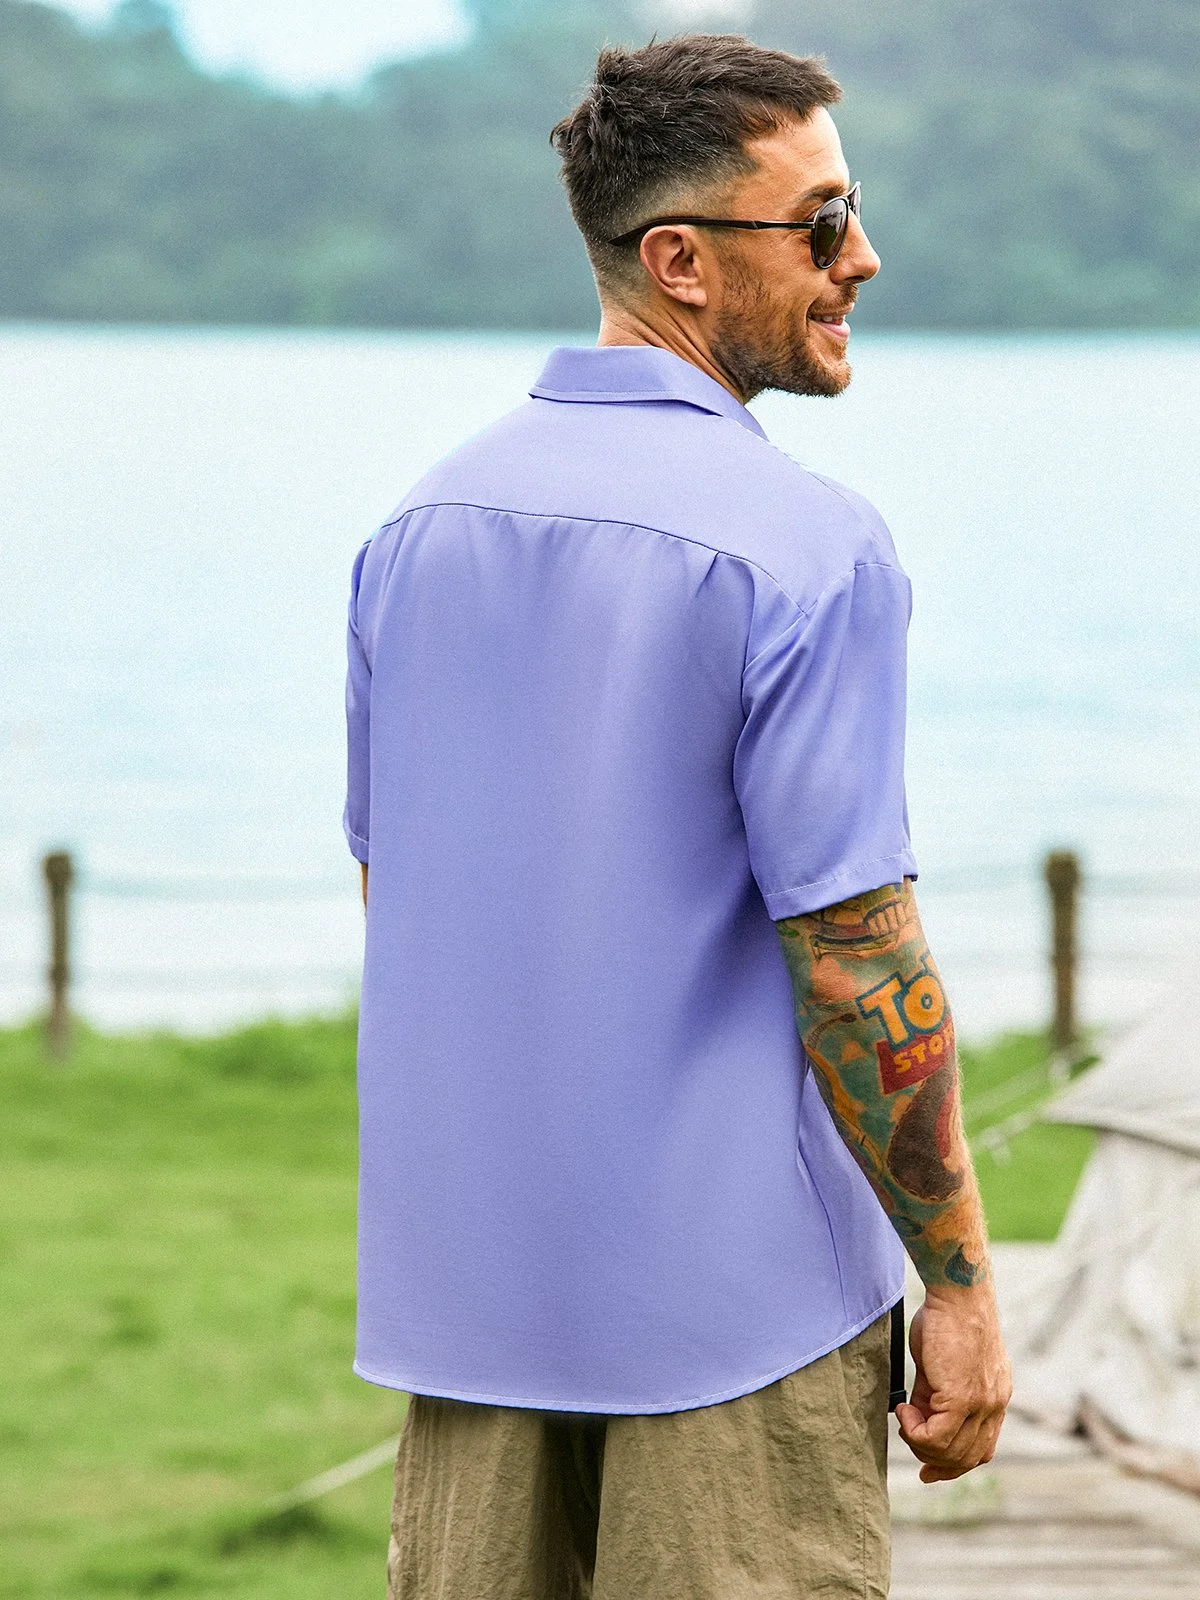 Hardaddy Geometric Stripe Chest Pocket Short Sleeve Casual Shirt